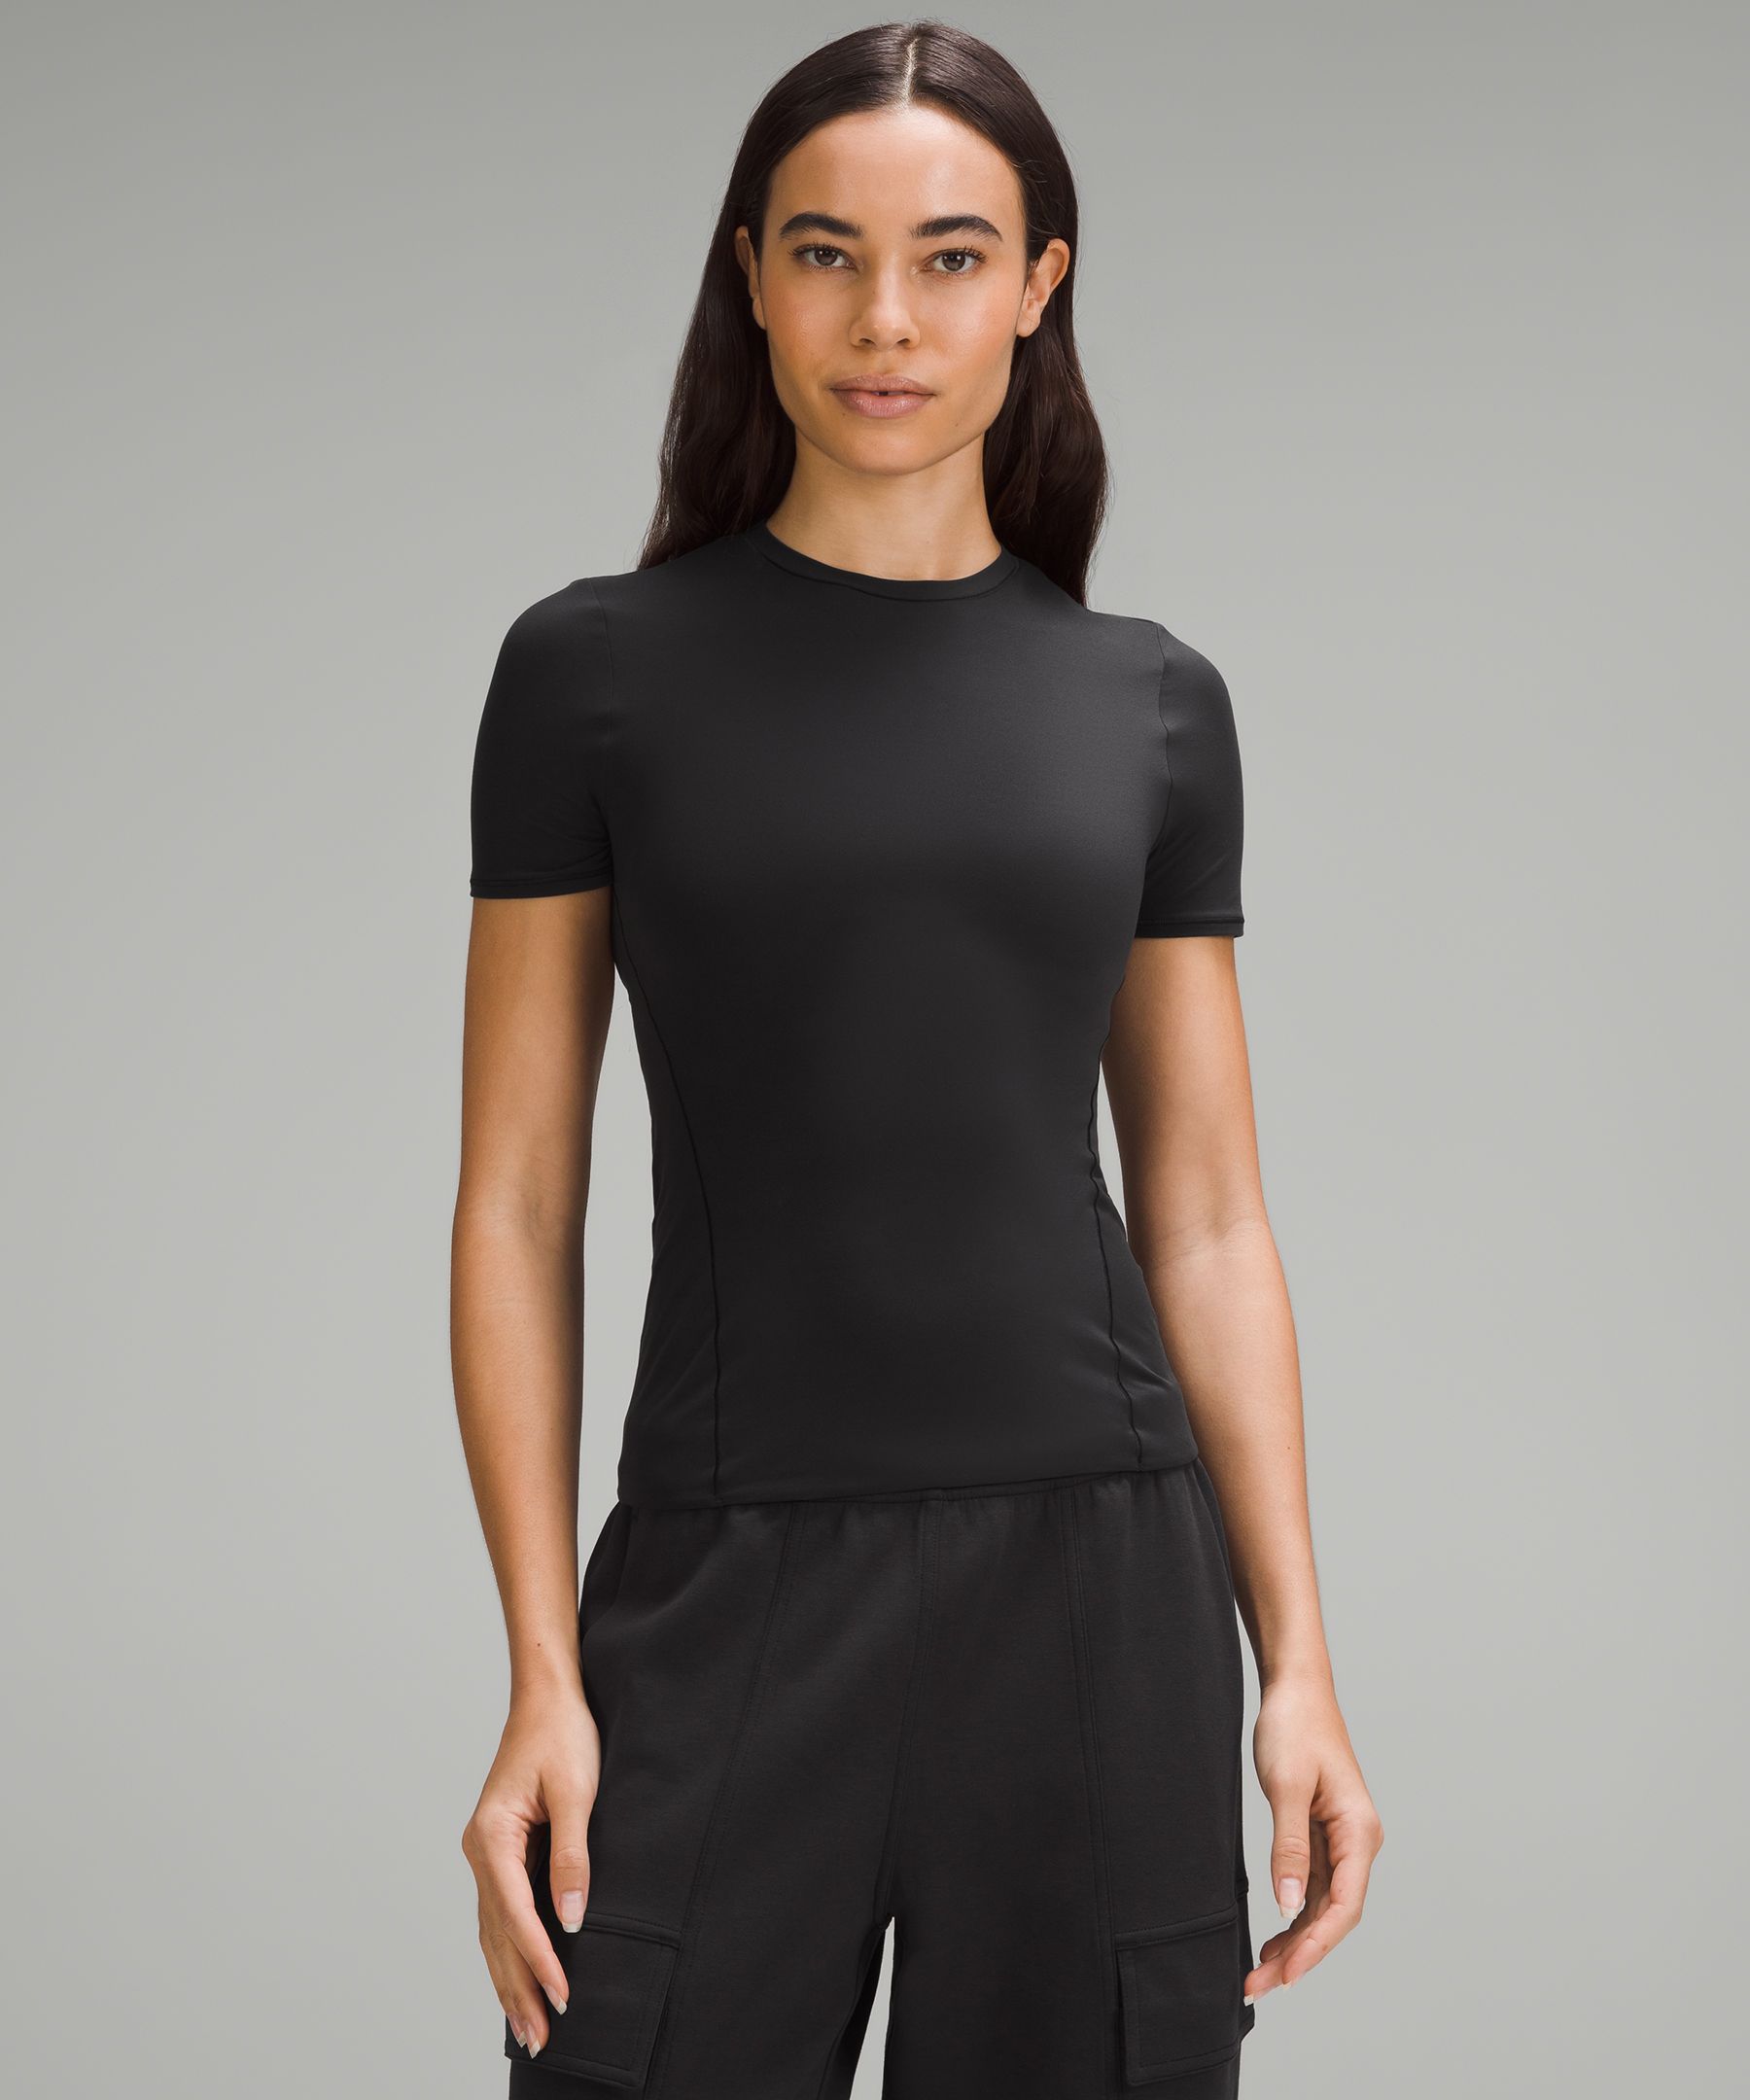 Lululemon athletica Wundermost Ultra-Soft Nulu Turtleneck Bodysuit, Women's Long Sleeve Shirts